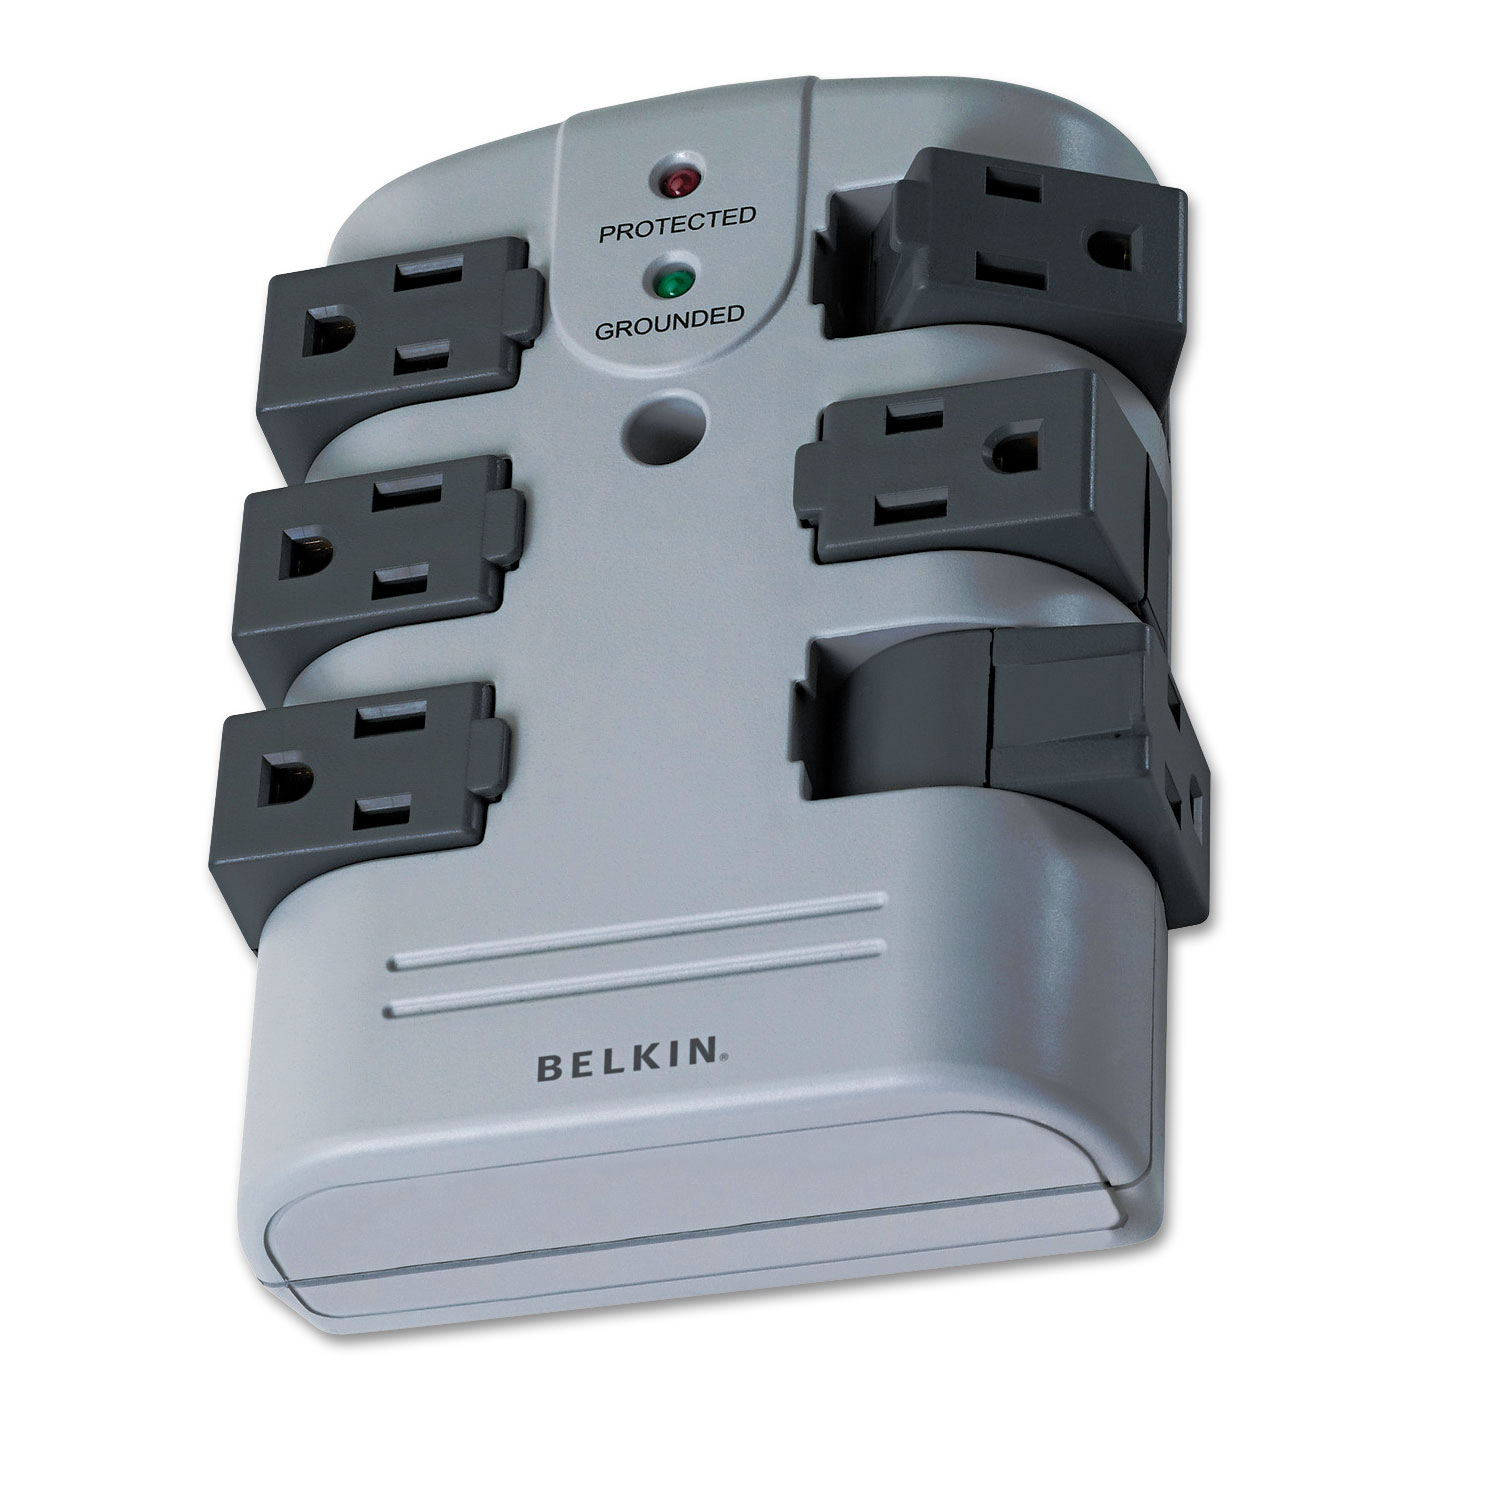  Belkin BP106000 Pivot Plug Surge Protector, 6 Outlets, 1080 Joules, Gray (BLKBP106000) 